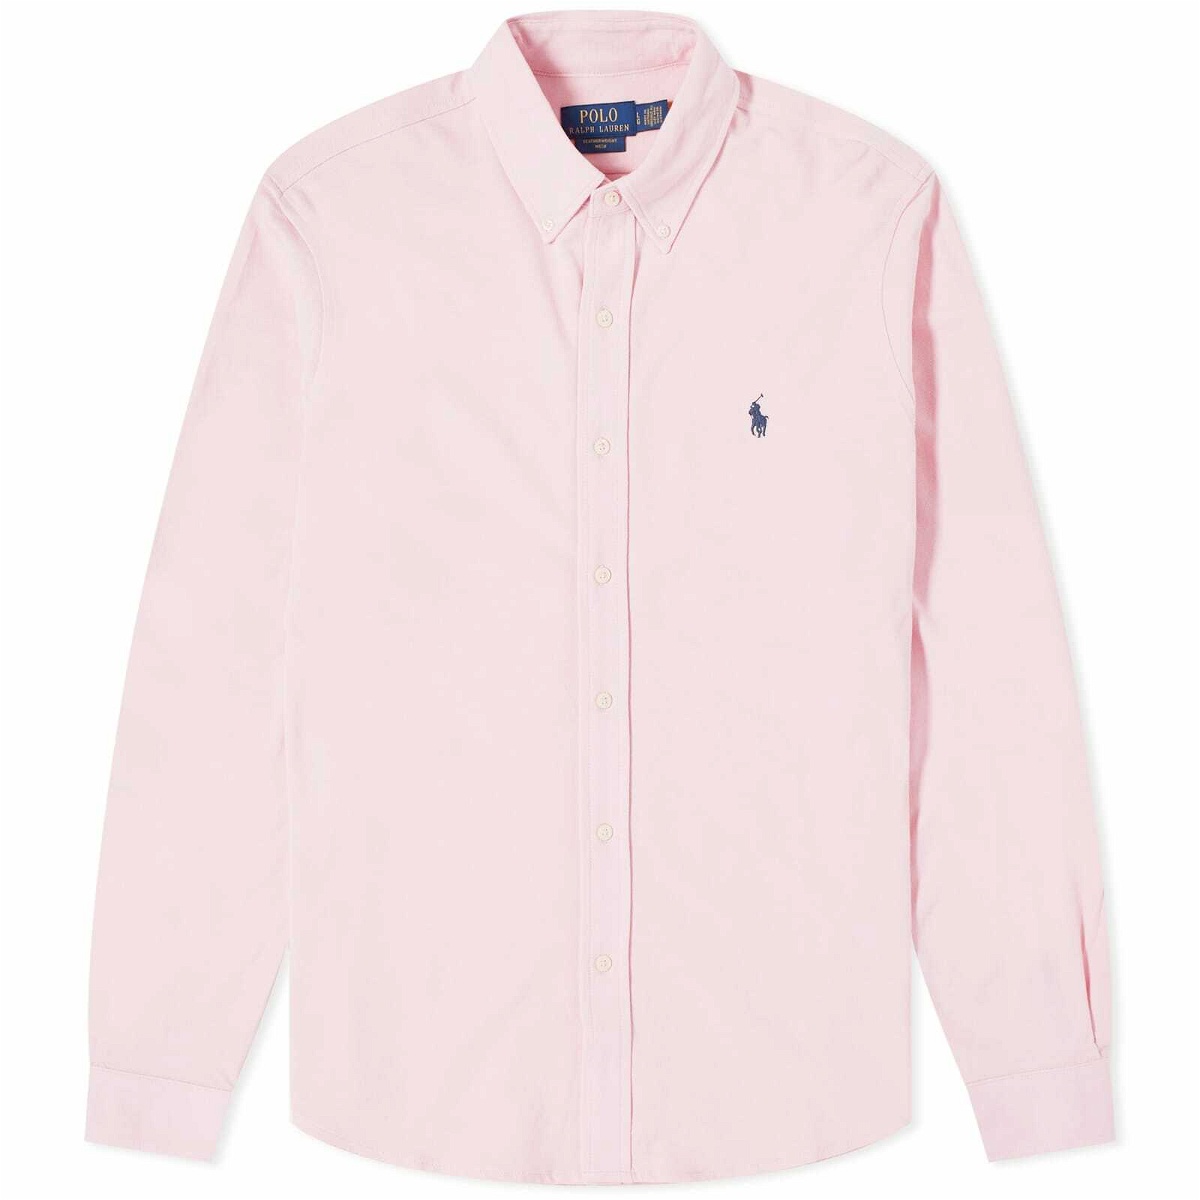 Photo: Polo Ralph Lauren Men's Button Down Pique Shirt in Garden Pink